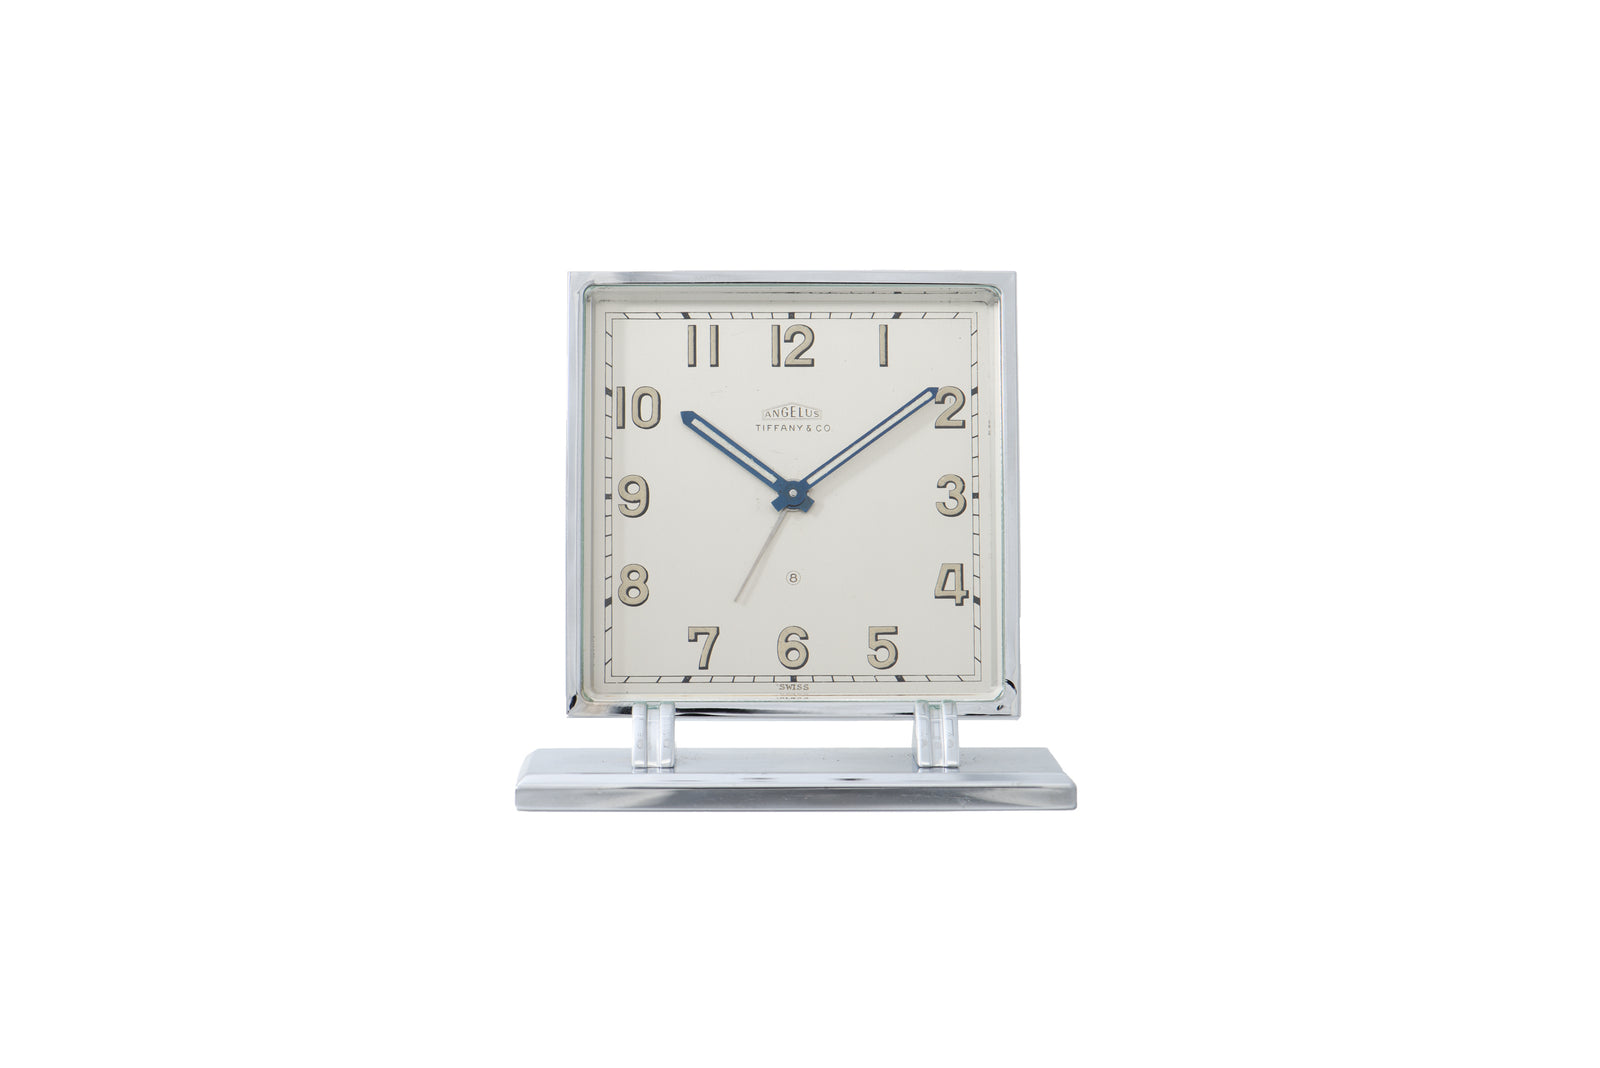 Rue de la Paix Desk Clock with 24-hour Alarm, British Racing Green